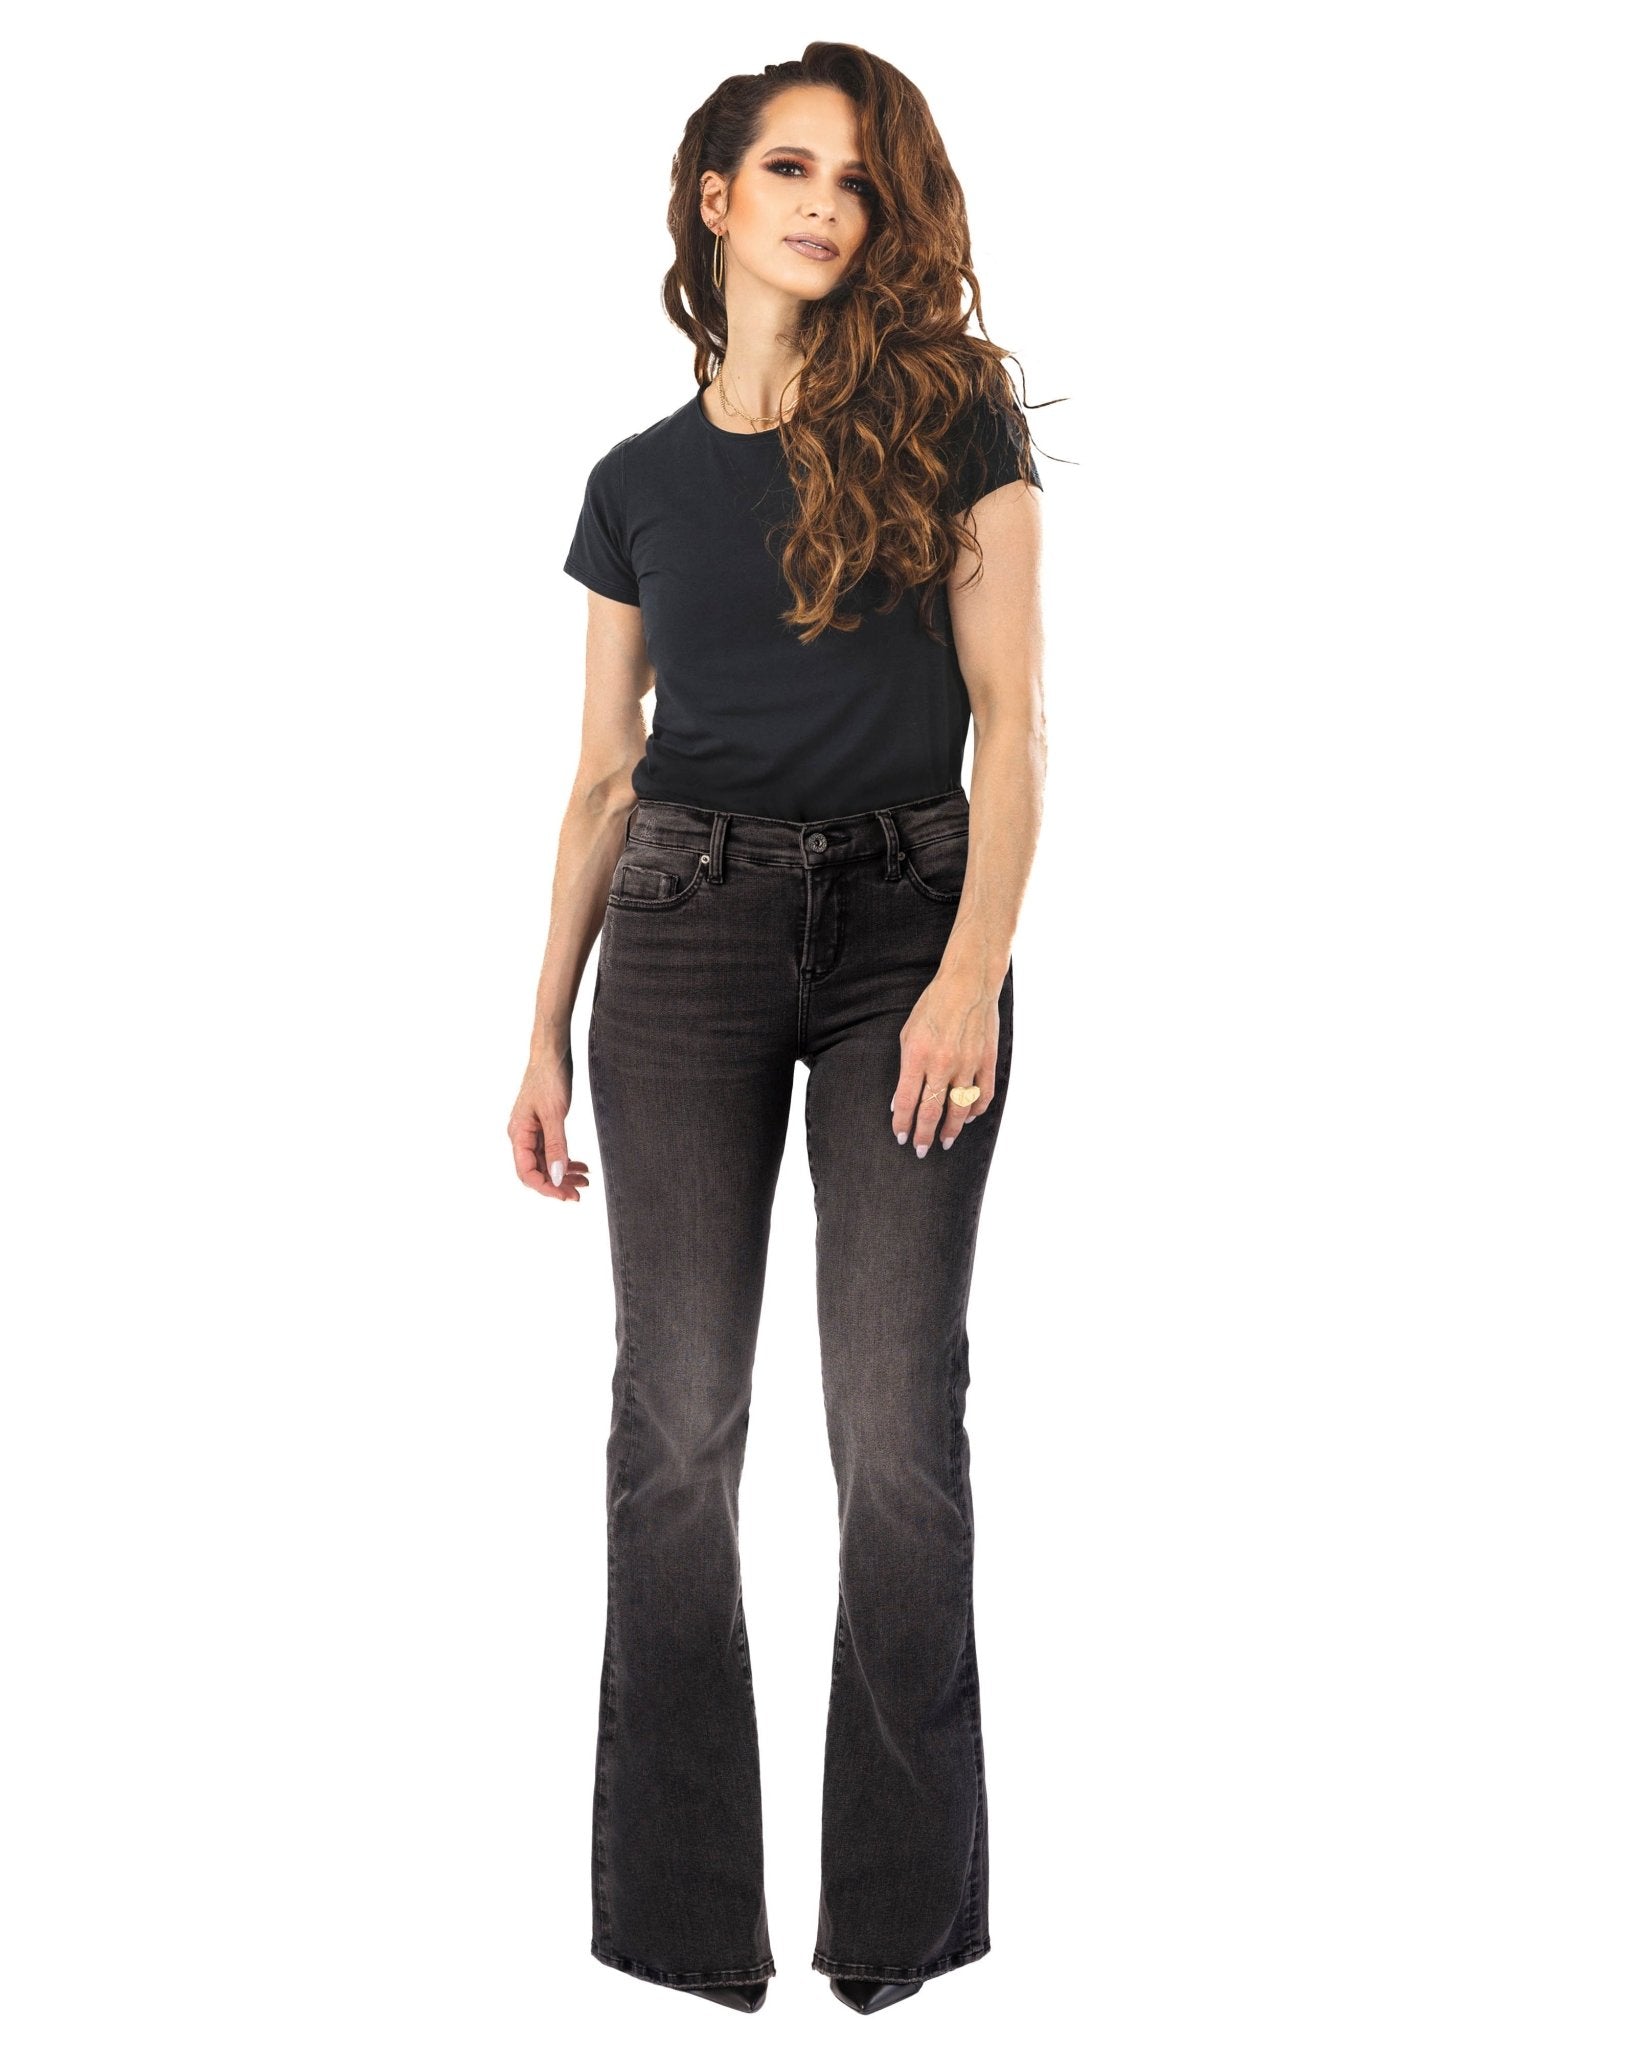 Jean, Stretchy Denim, High Waist Jeans – Nancy Rose | Stretchjeans